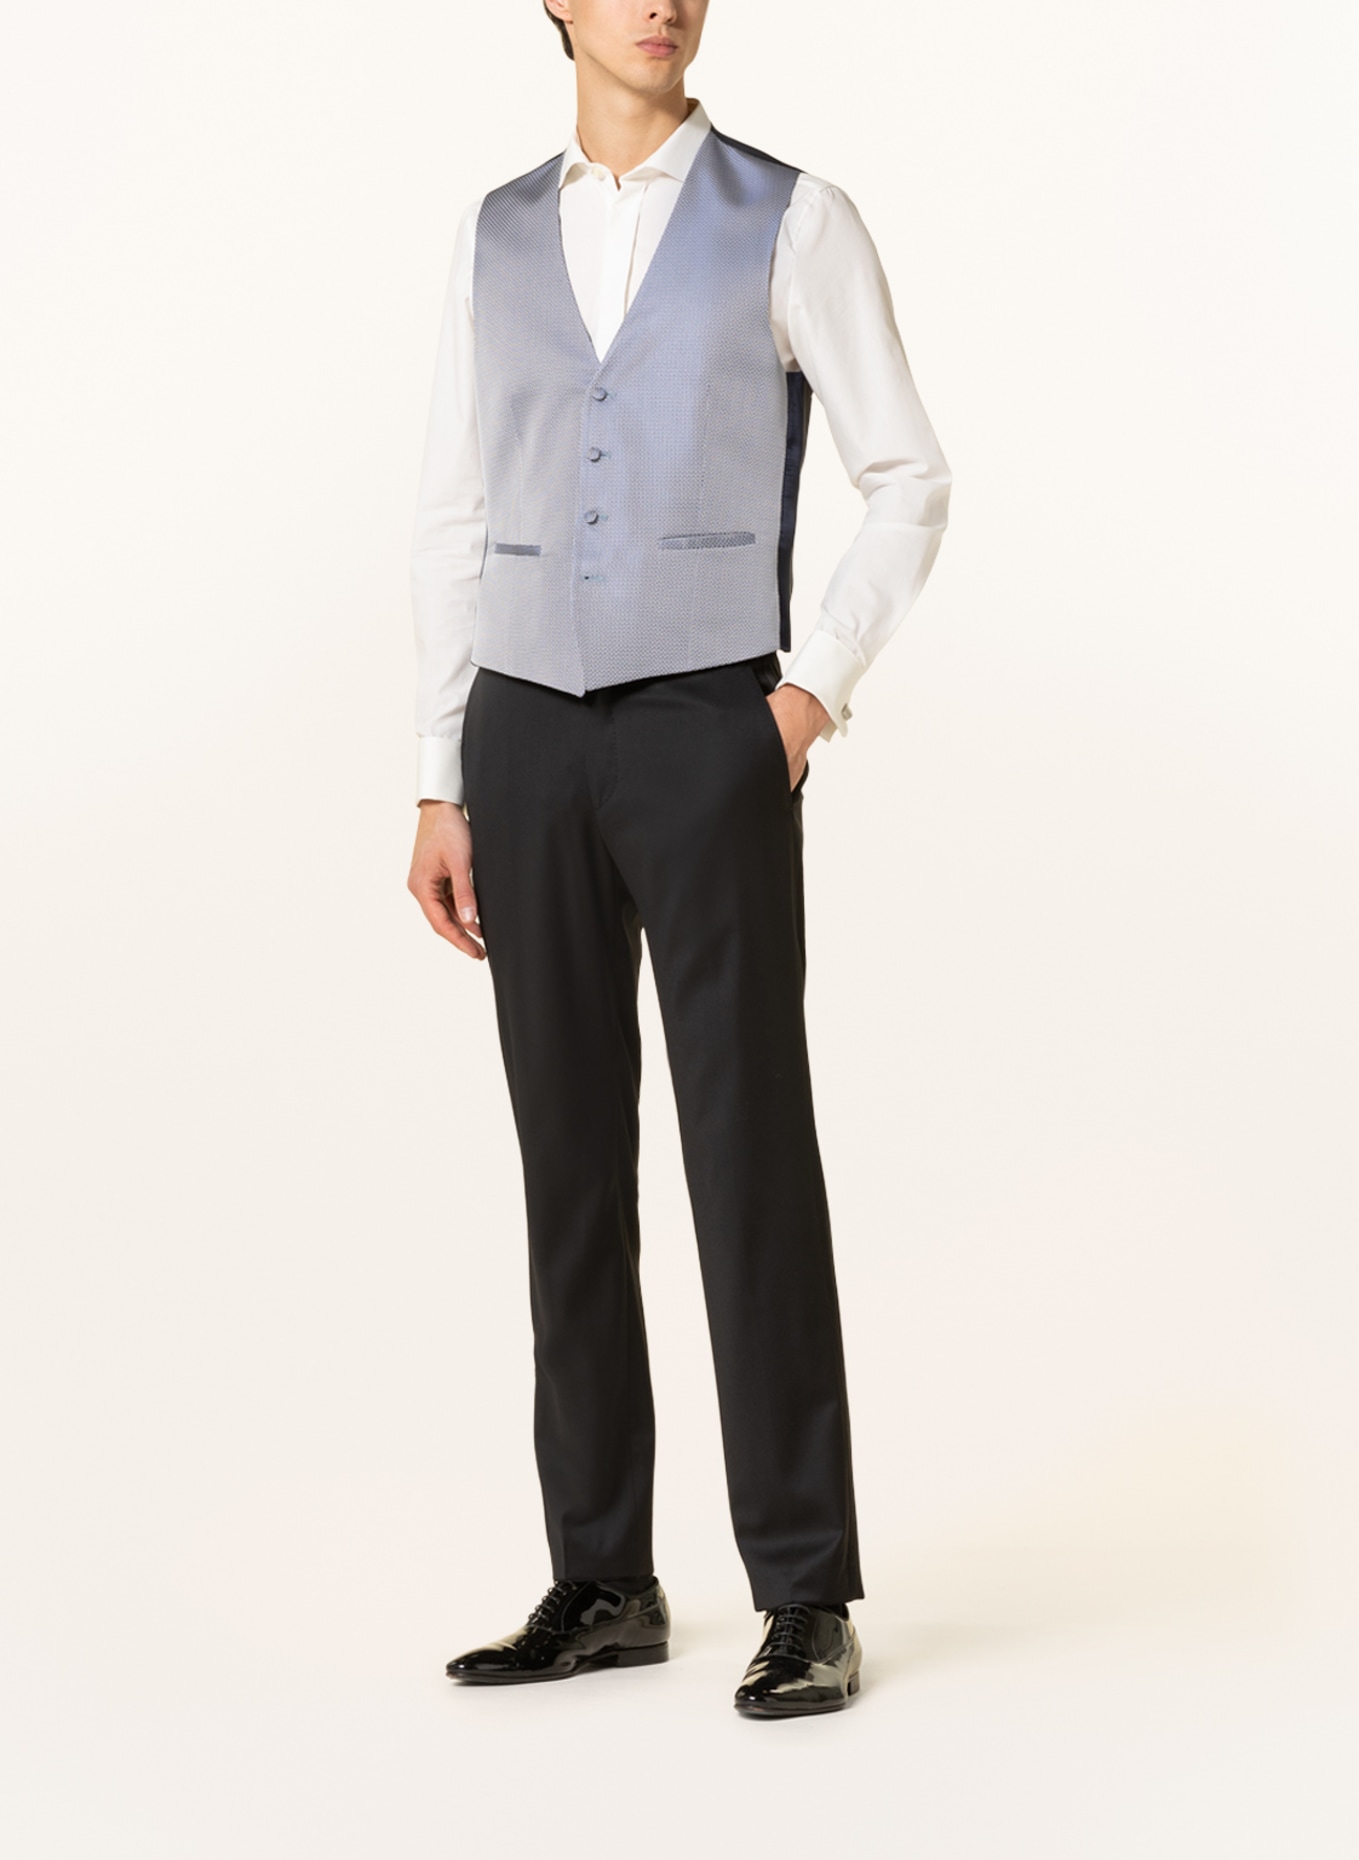 WILVORST Suit vest slim fit, Color: DARK BLUE/ GRAY (Image 2)